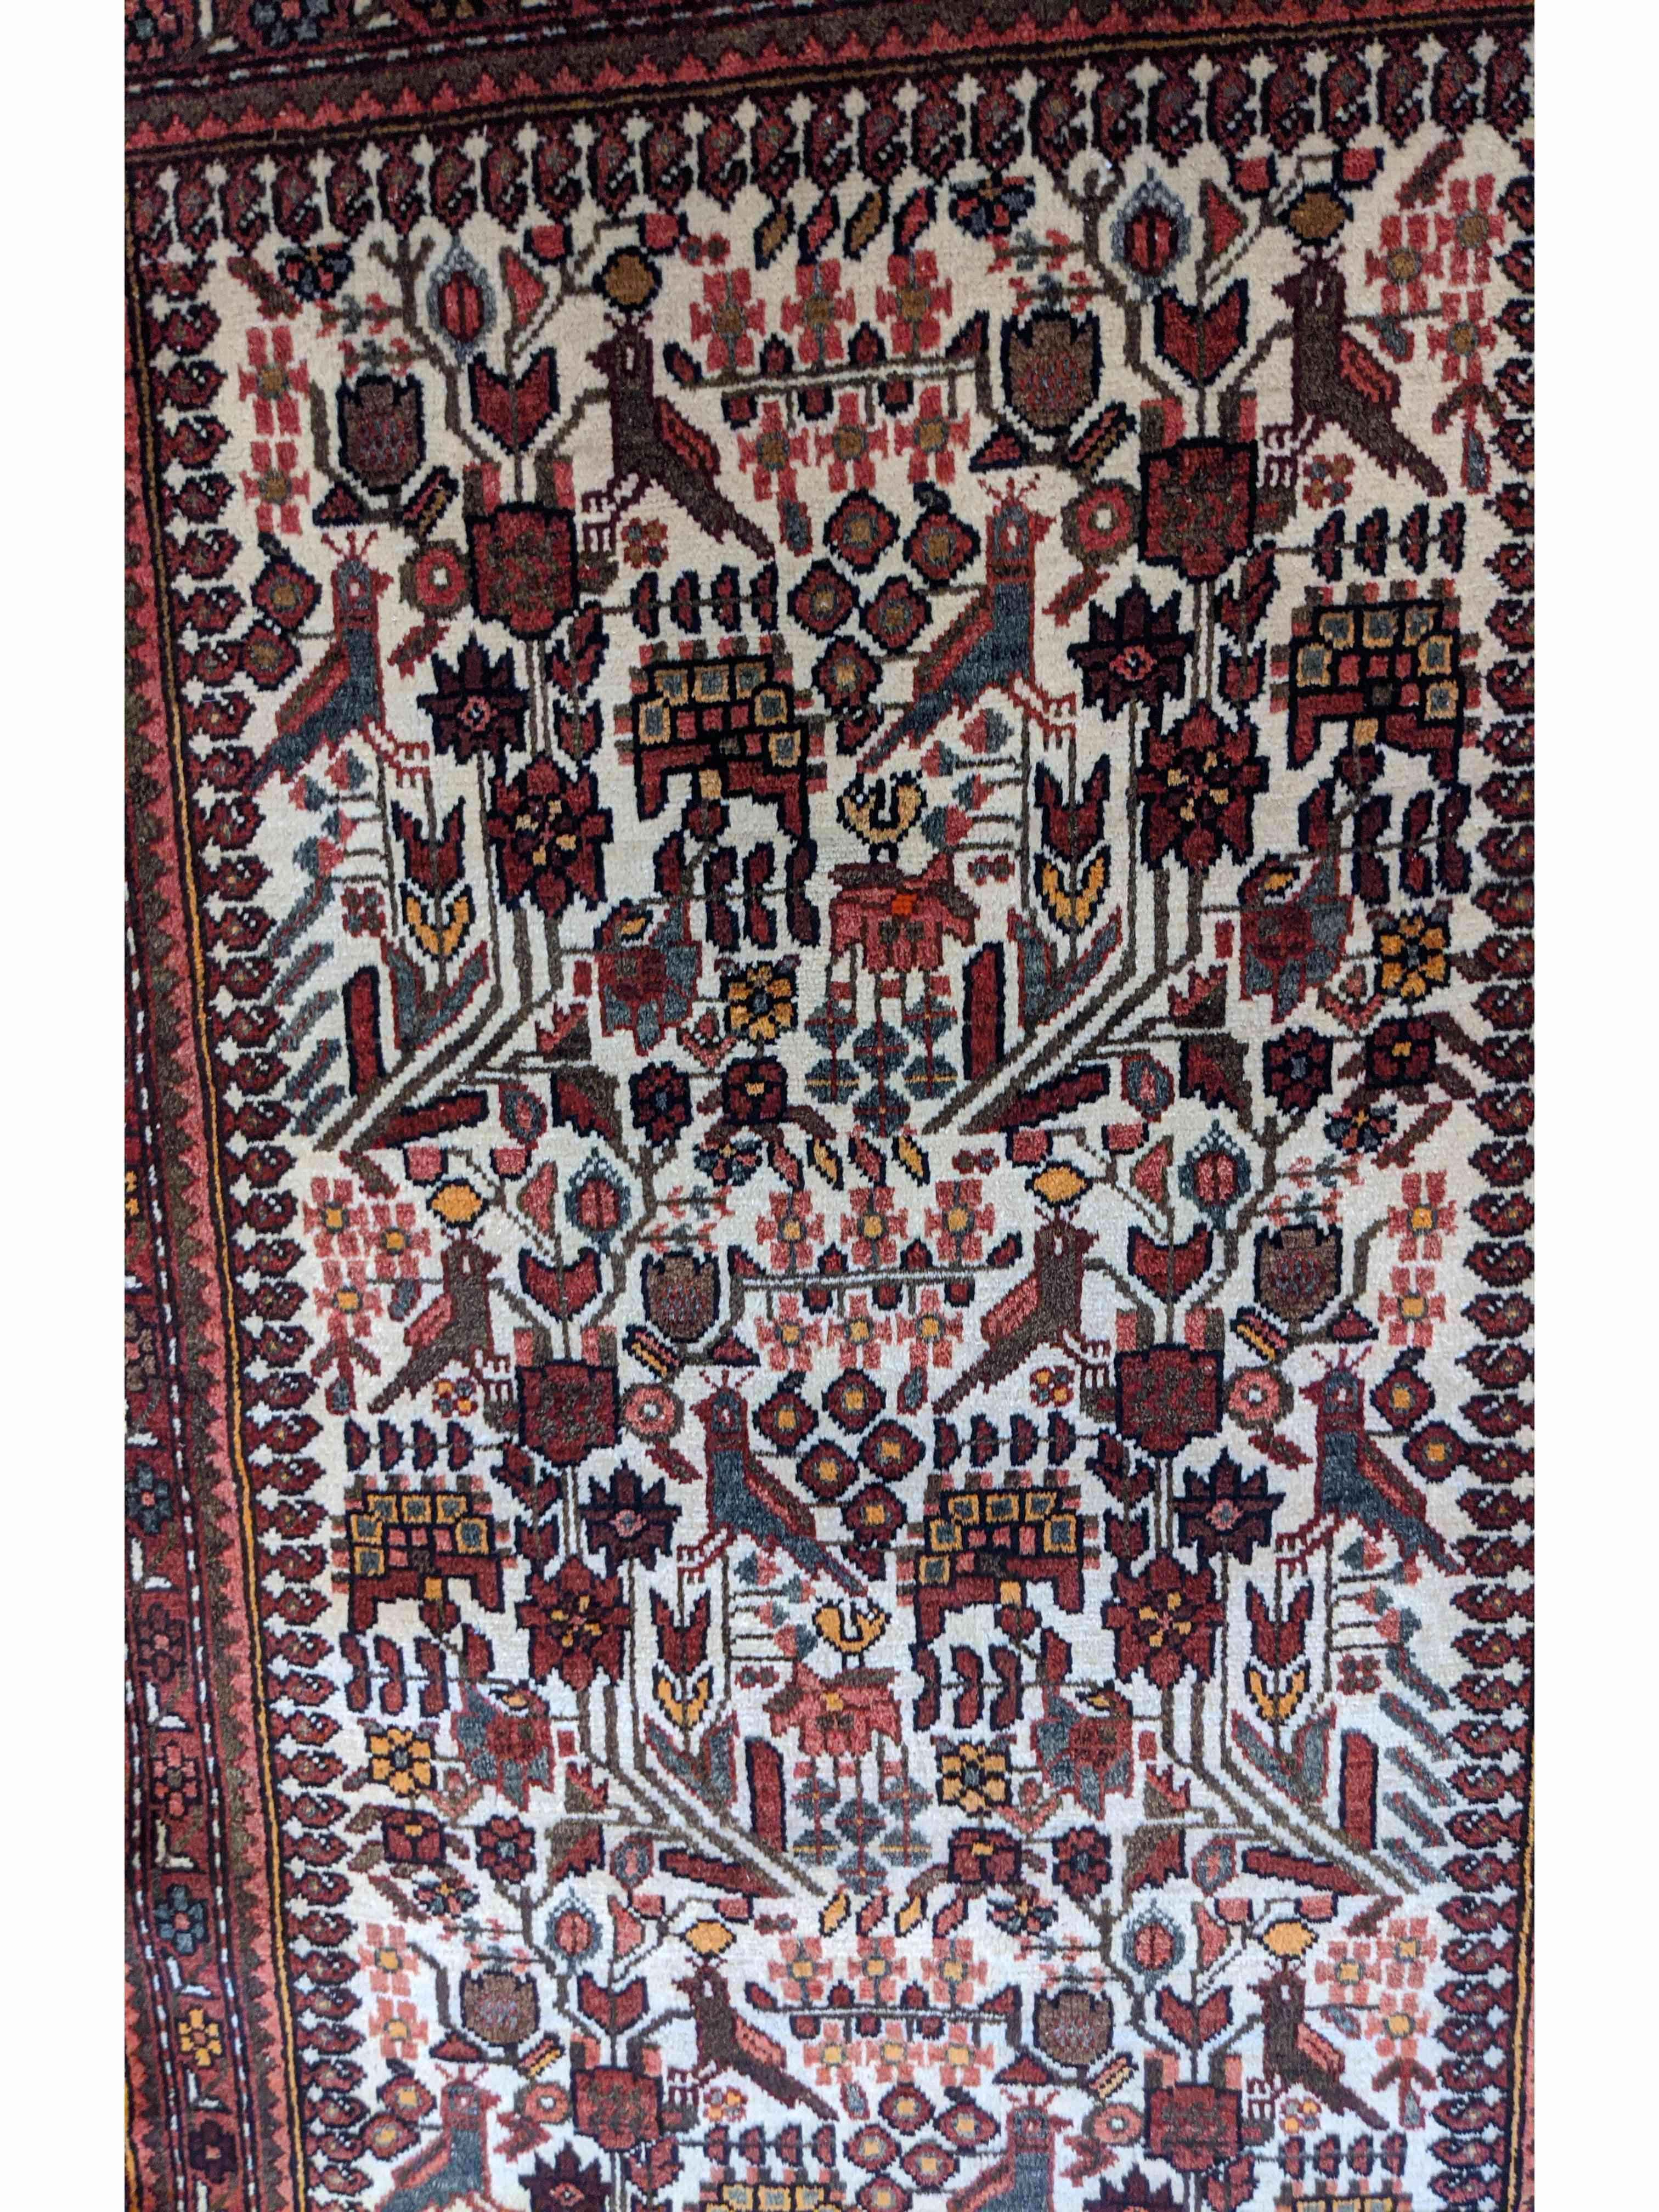 150 x 100 cm Persian Hamadan Traditional White Rug - Rugmaster